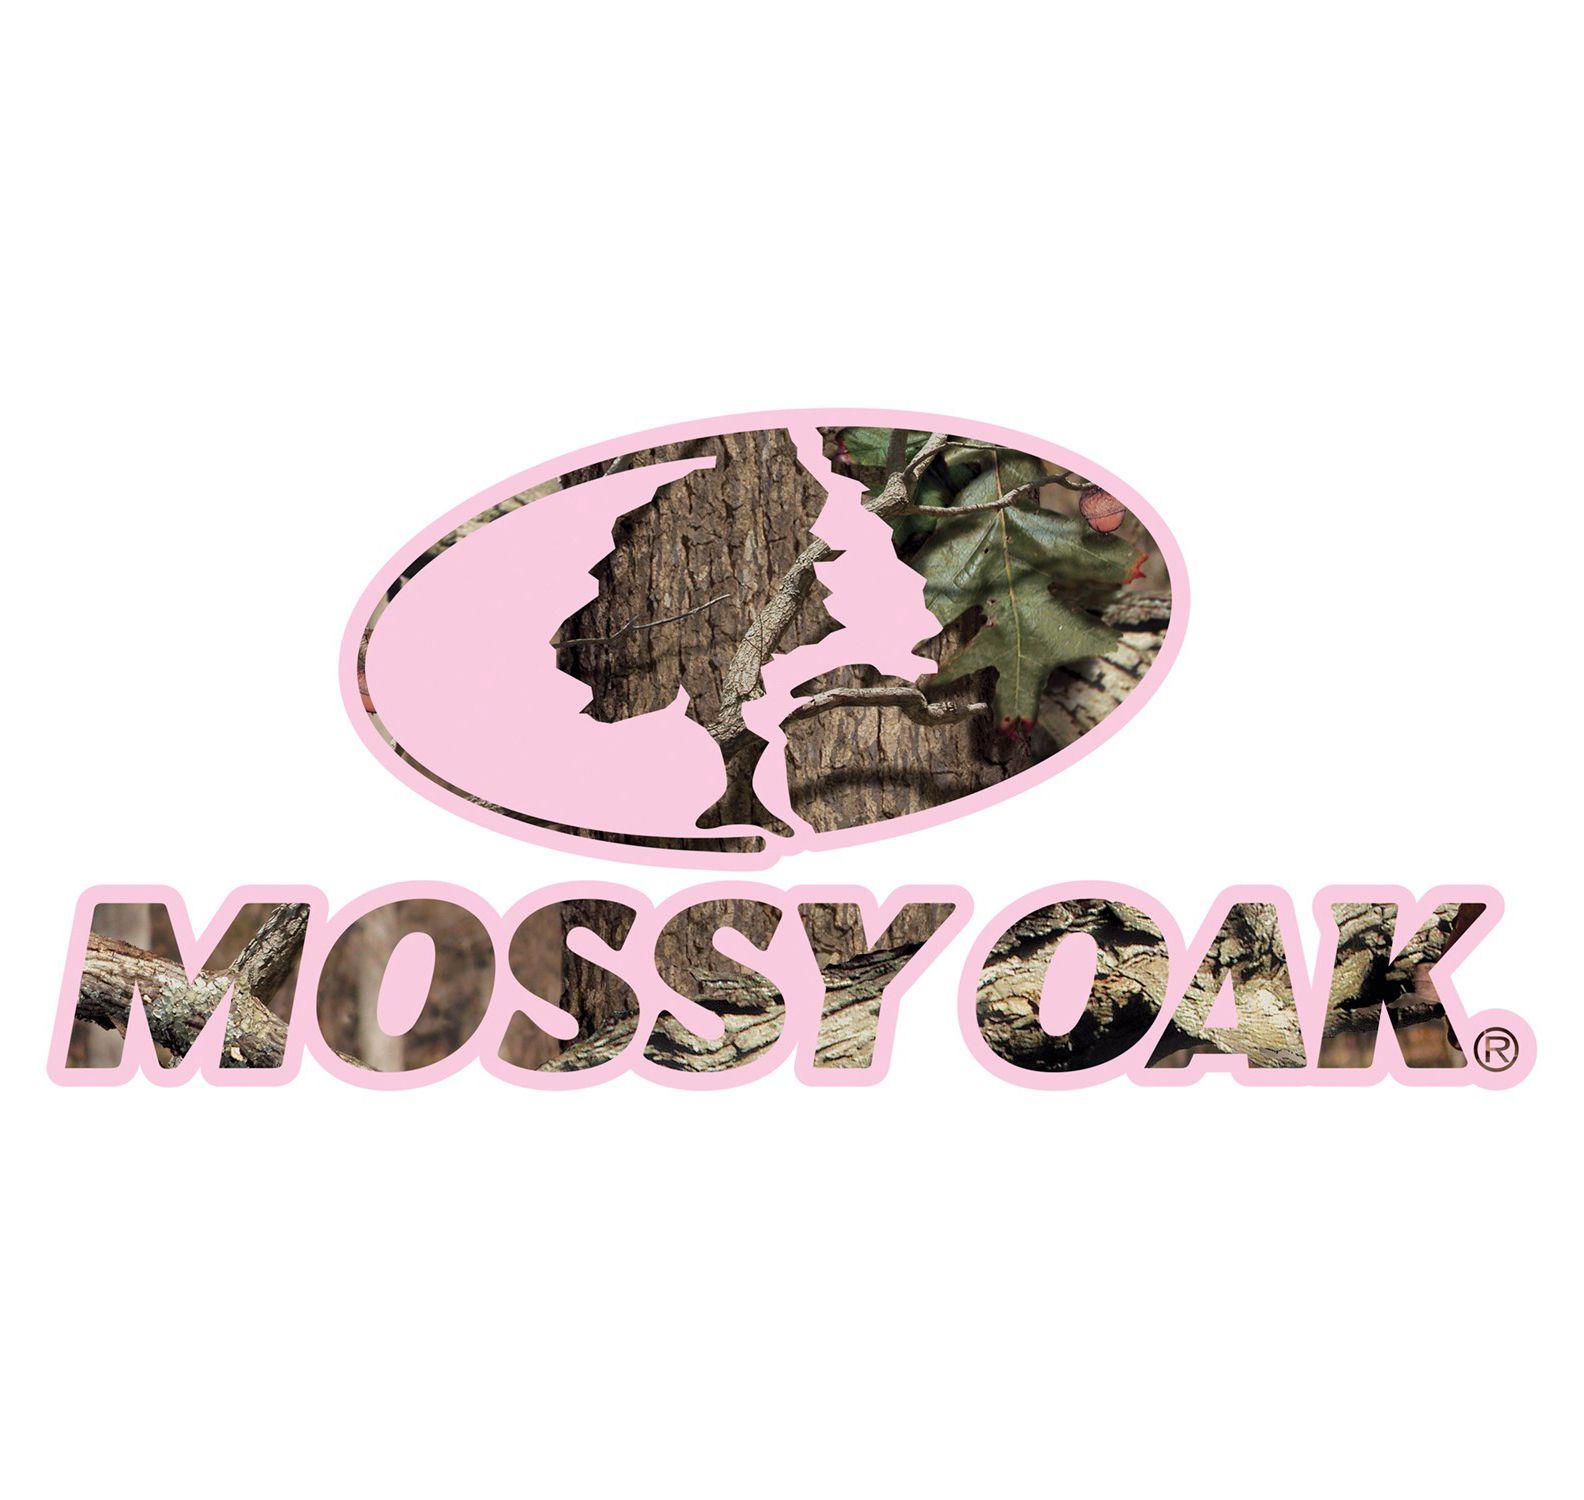 Camo Infinity Logo - Mossy Oak® Camo Logo Decal Up Infinity® Pink. Camouflage